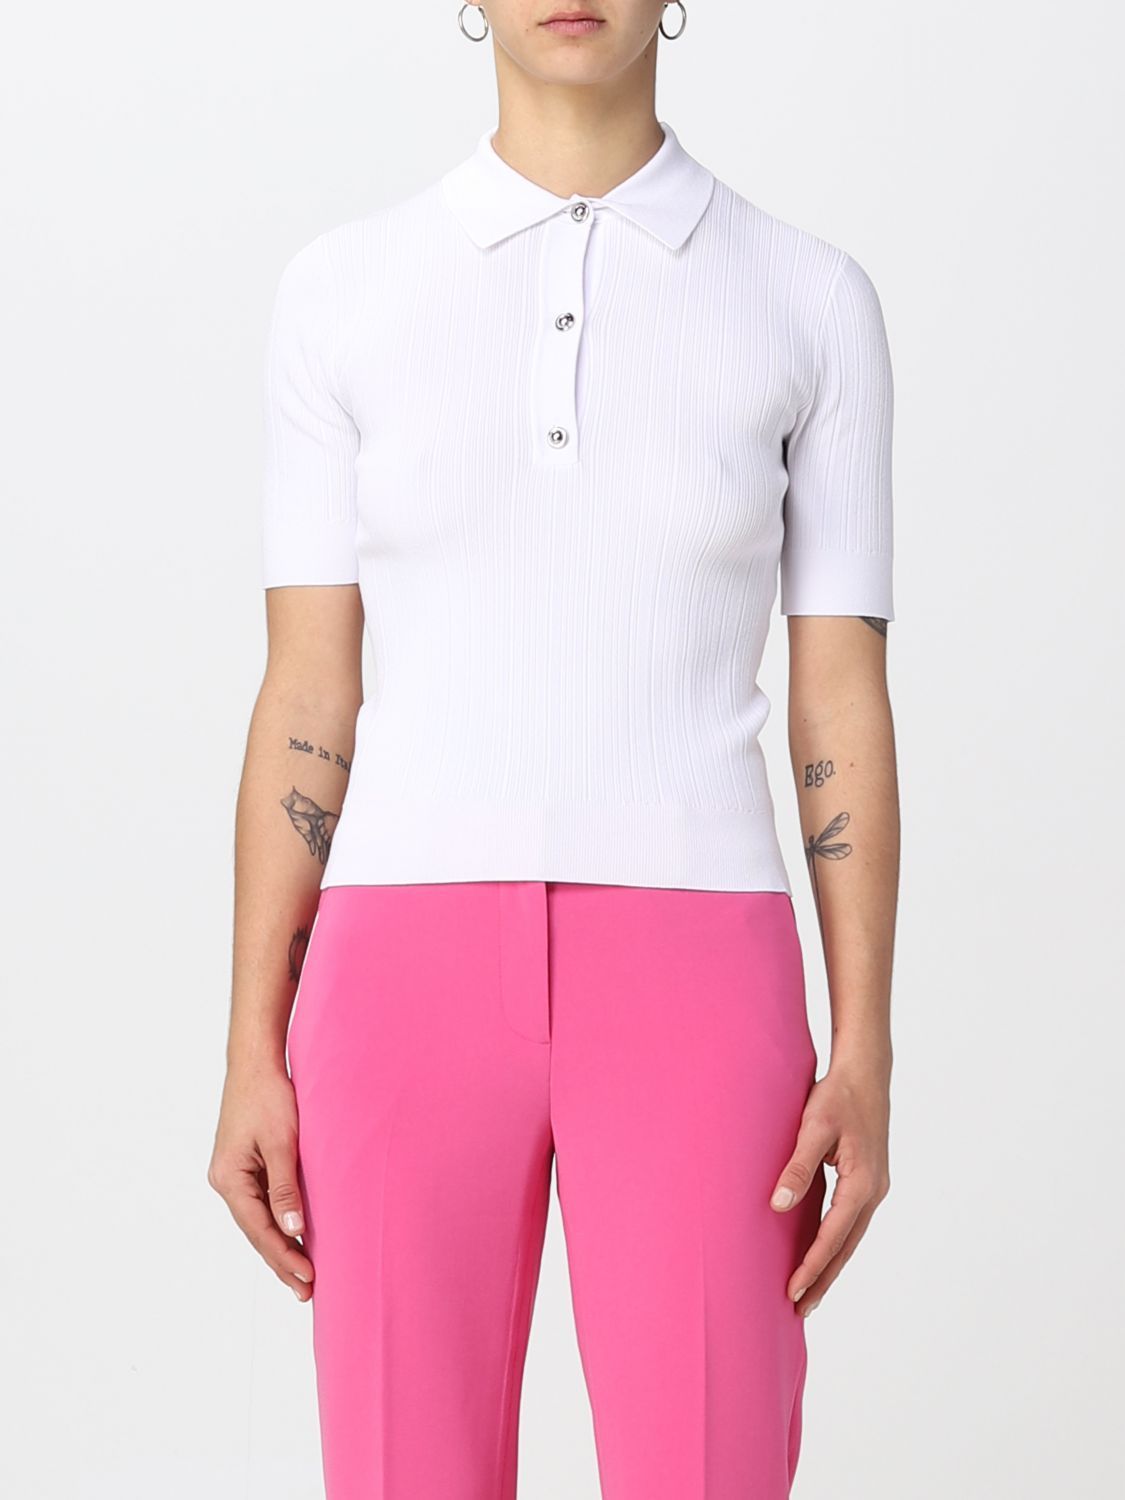 MICHAEL KORS: polo shirt for women - White | Michael Kors polo shirt  MS2600C33D online on 